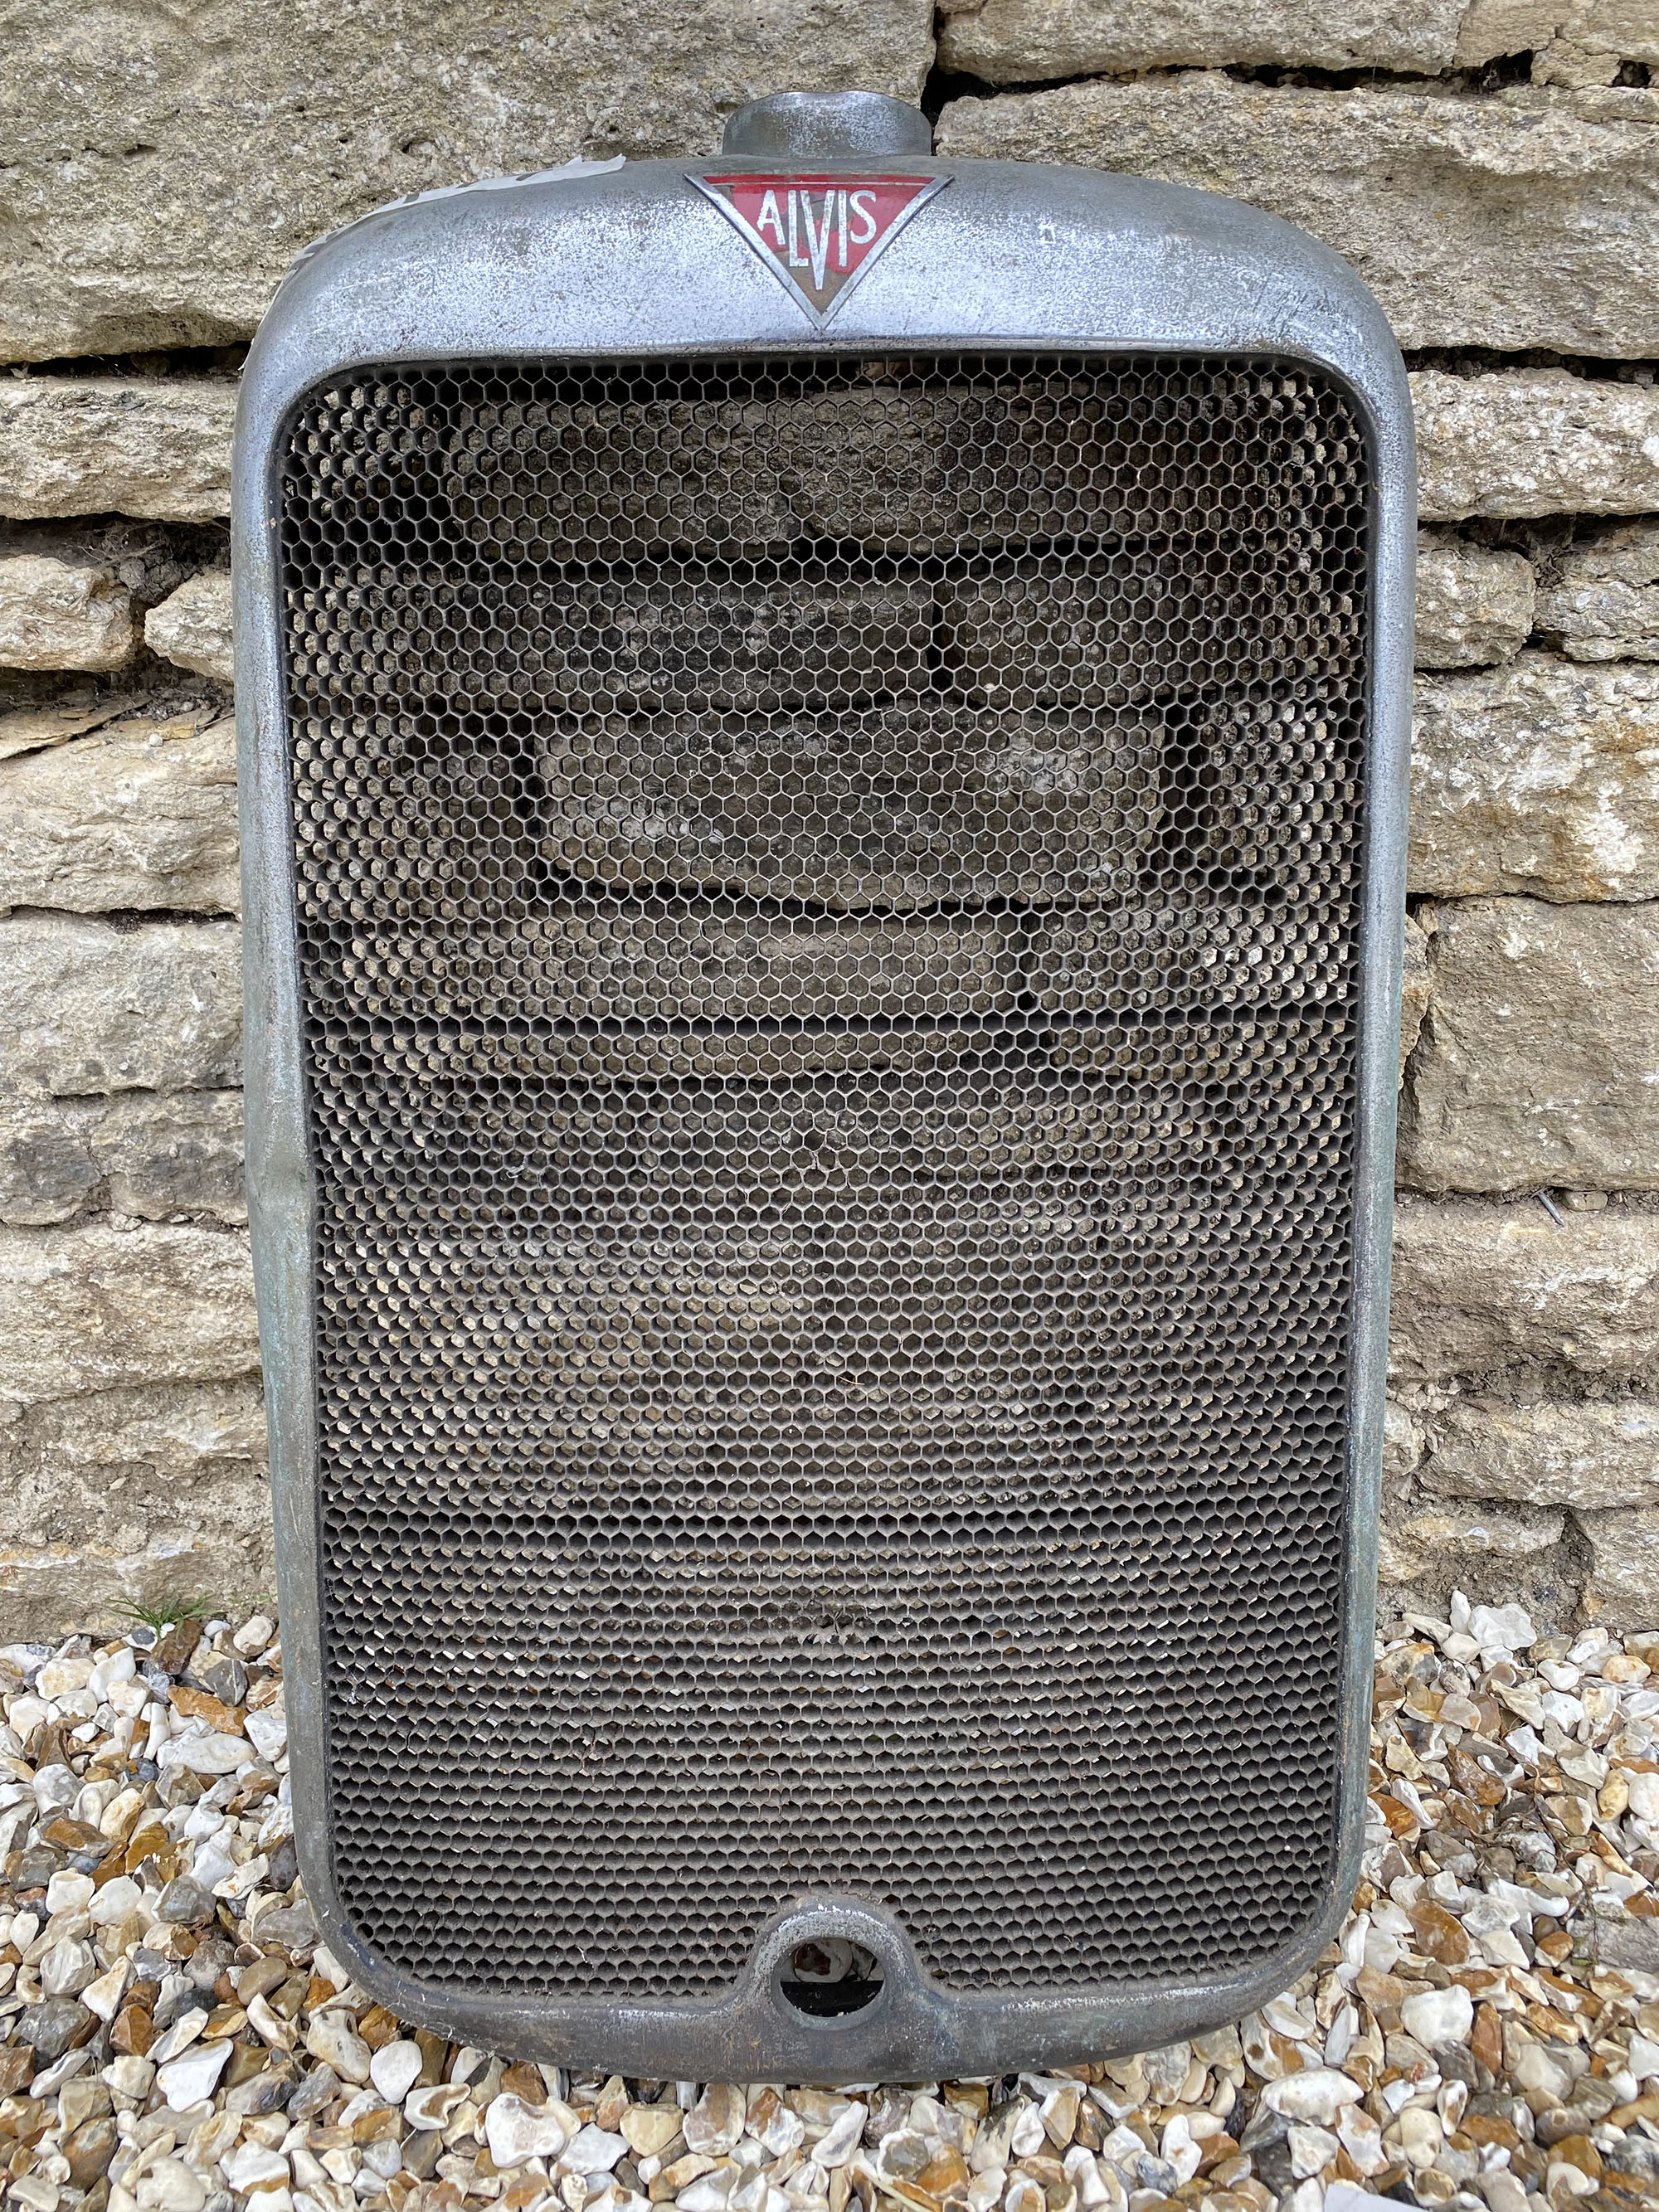 An Alvis Firefly radiator front.